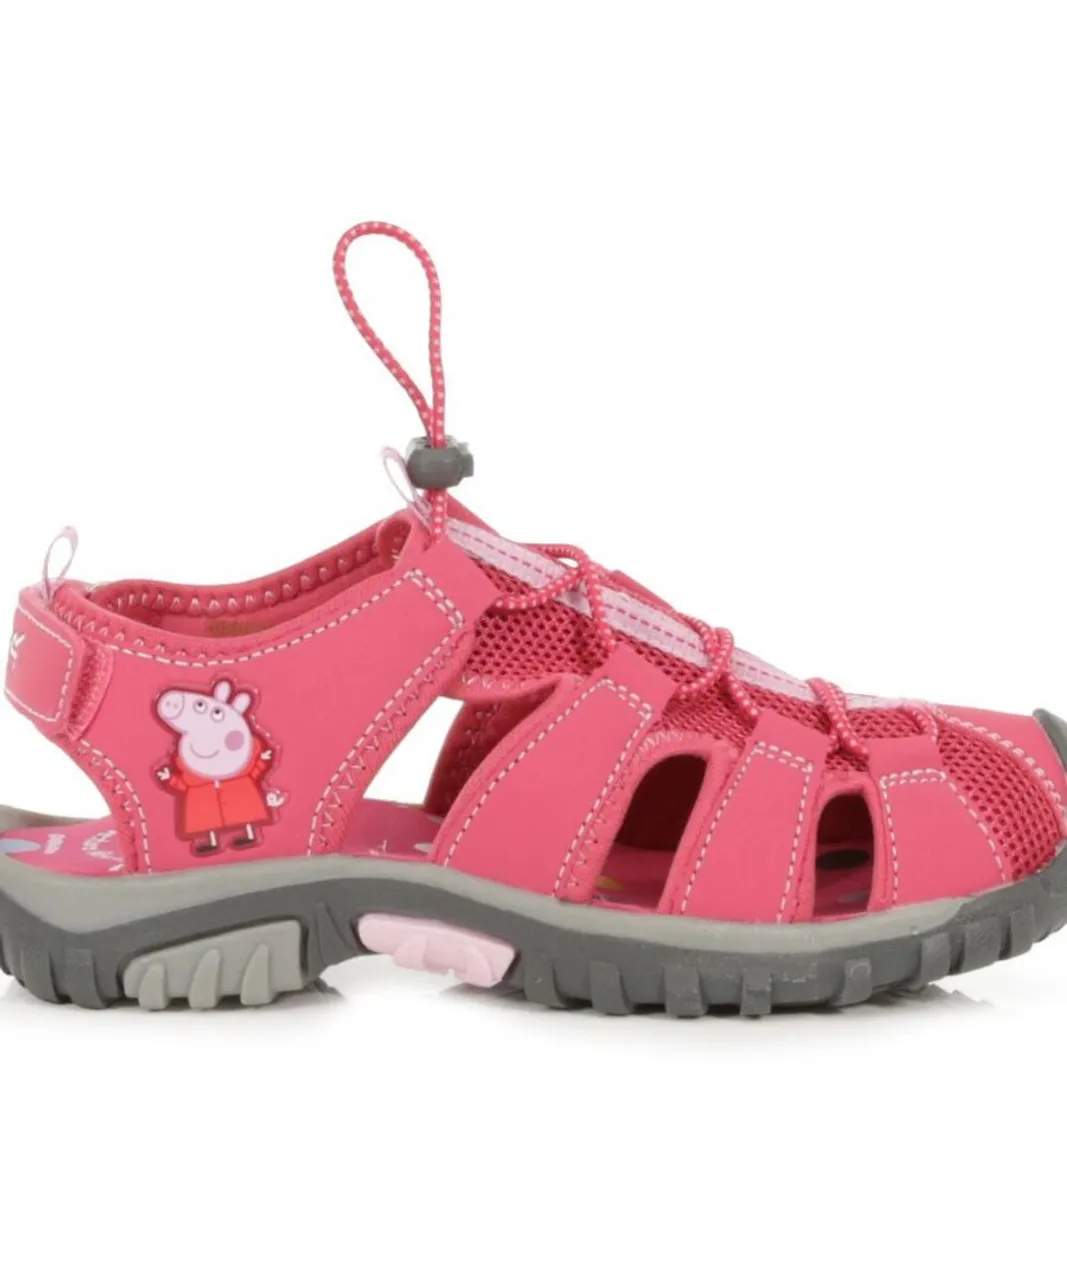 Regatta Girls Peppa Breathable Lightweight Walking Sandals - Pink